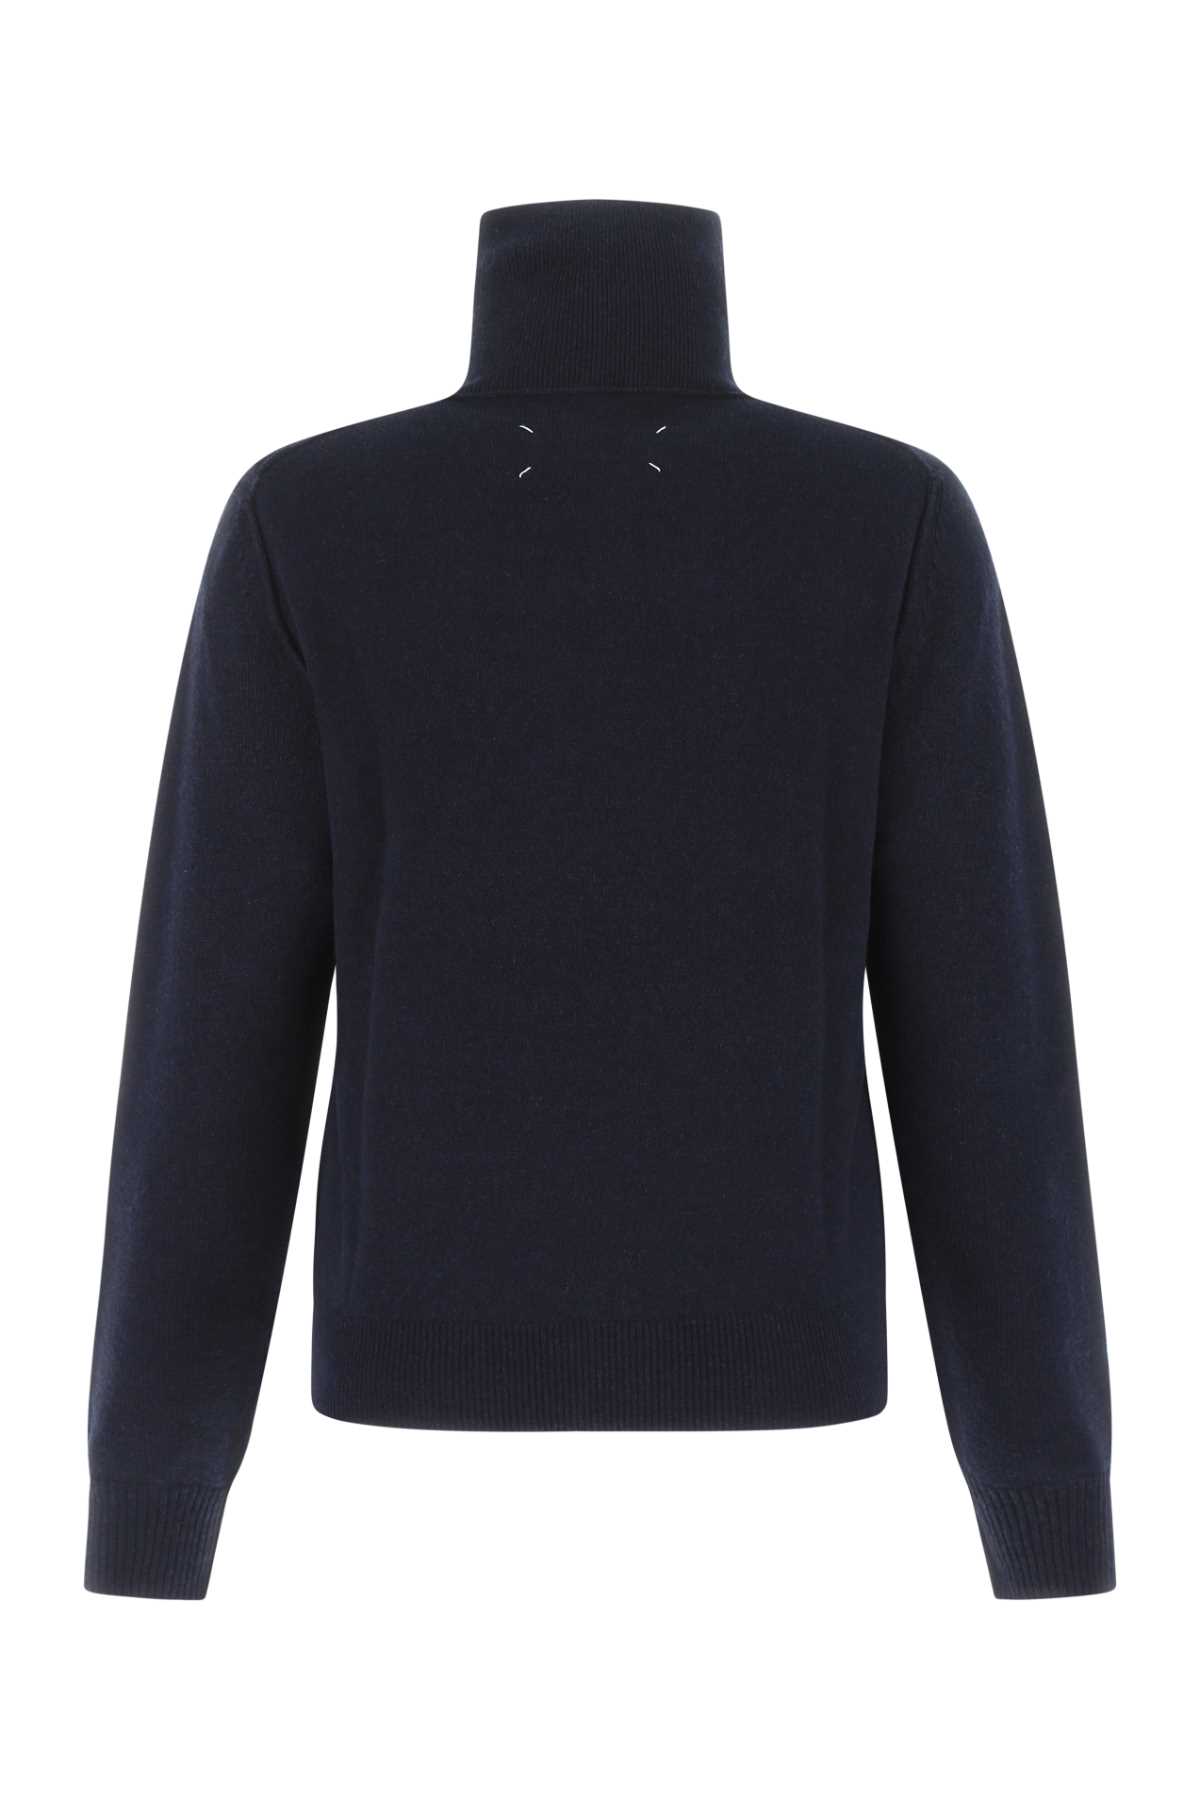 Maison Margiela Midnight Blue Cashmere Sweater In 511